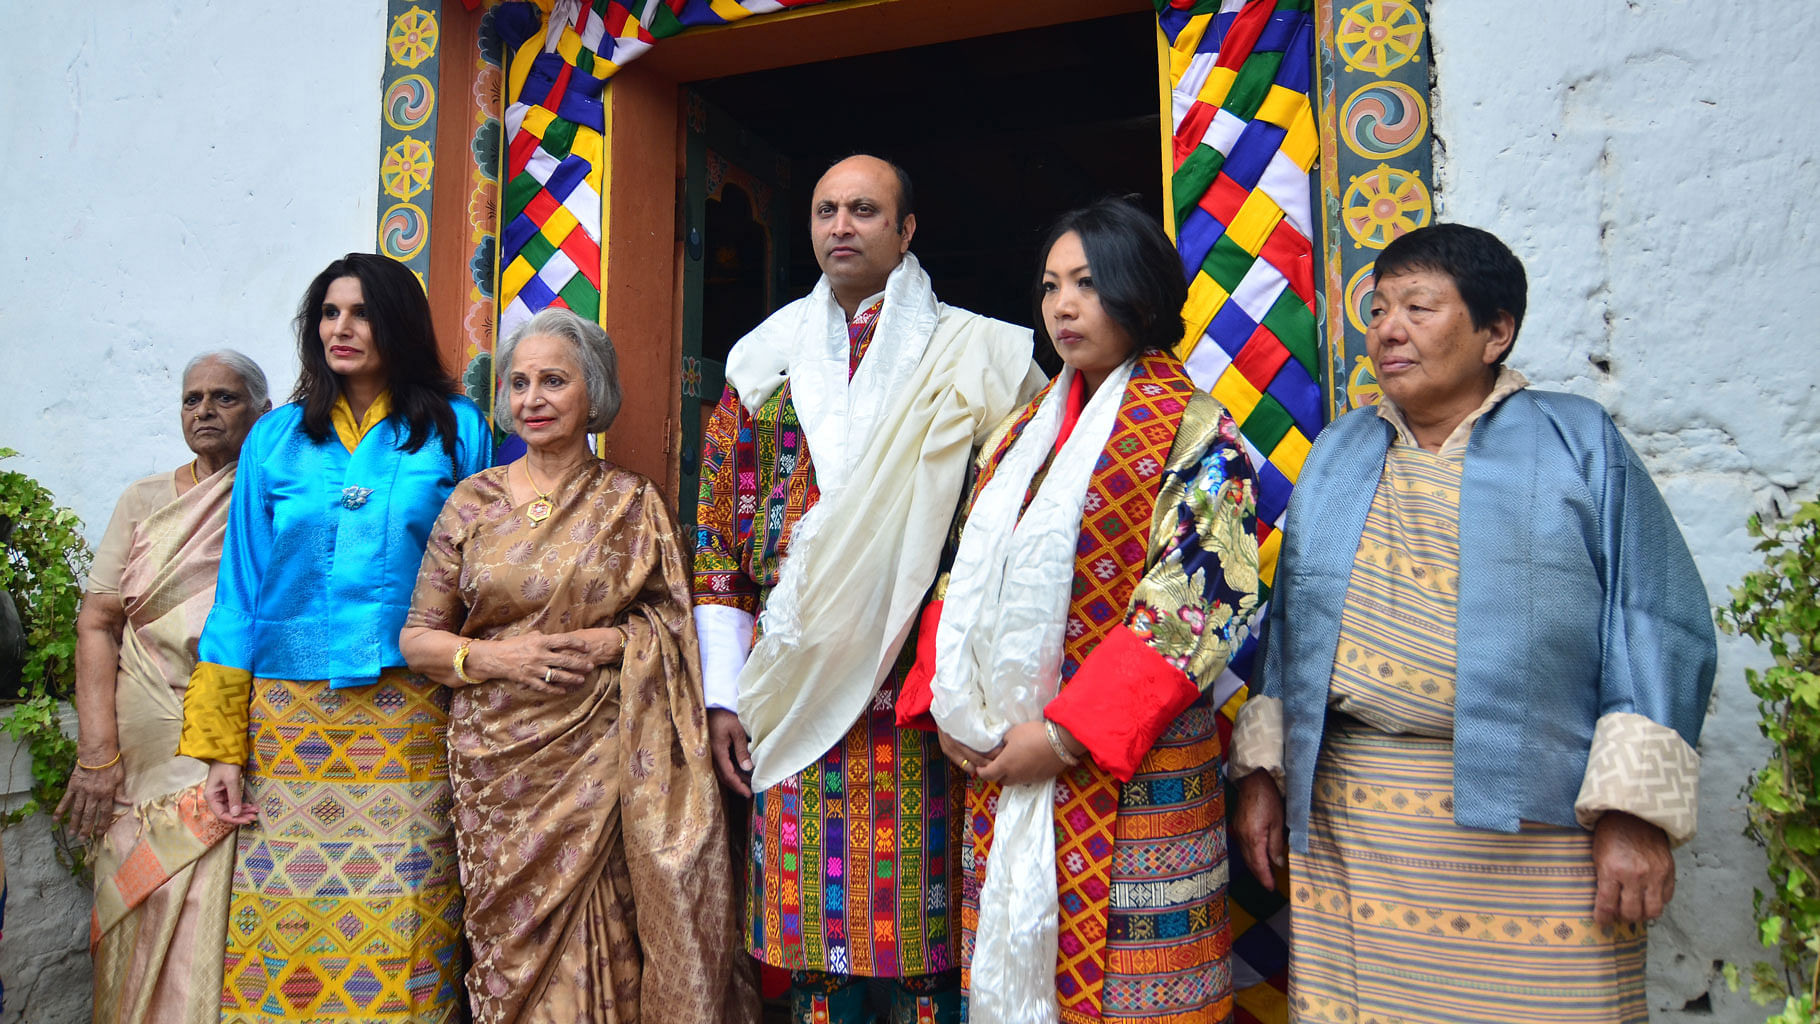 (From left) Kashvi beside mother Waheeda Rehman, Sohail Rekhy, Dechhen Pelden, and Dechhen’s mother, Mama Pelden (Photo courtesy: Bhawana Somaaya)